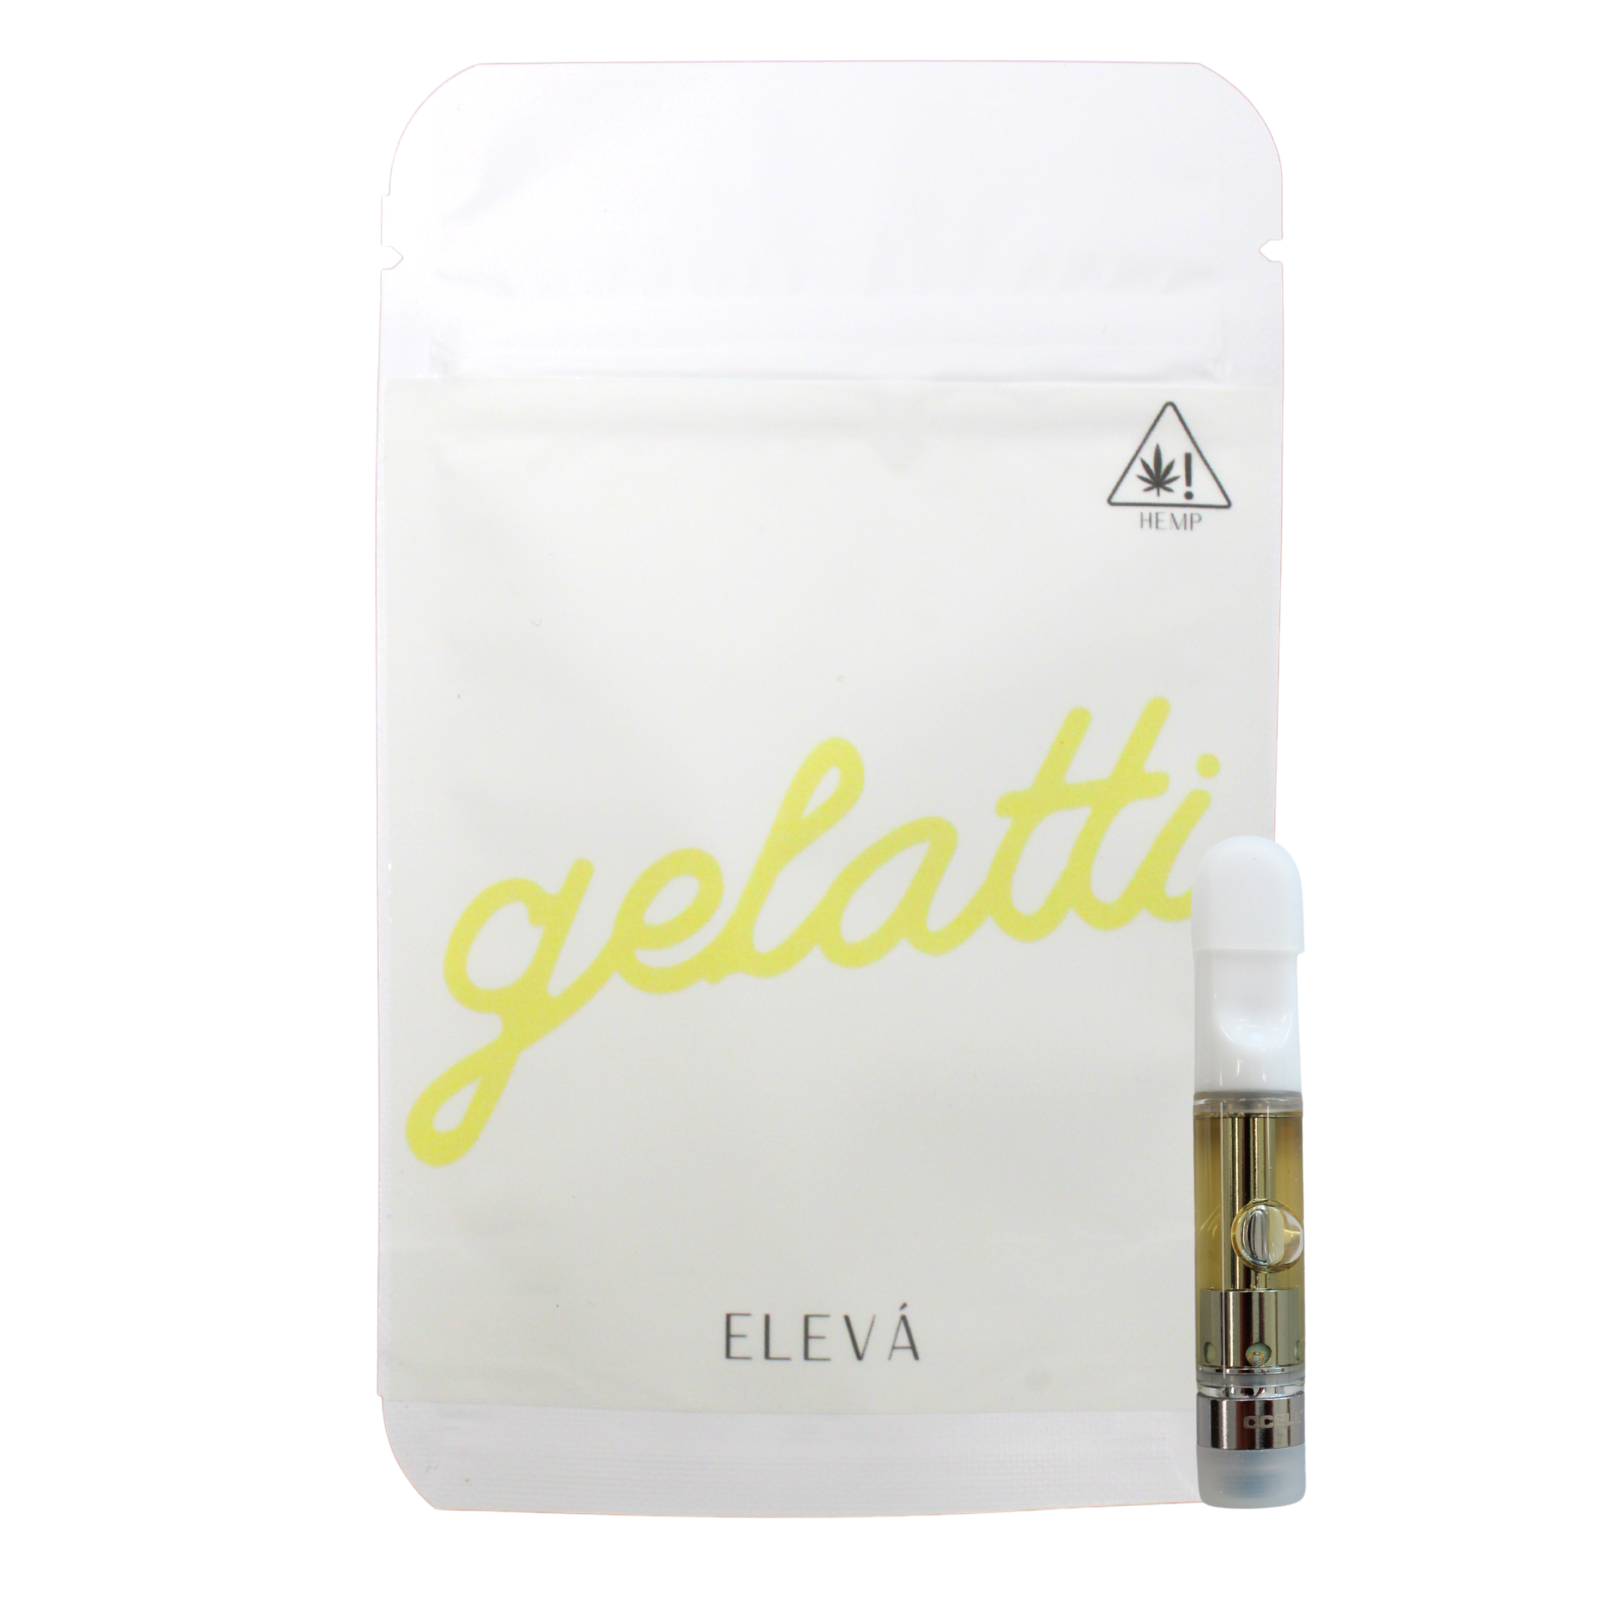 Gelatti 86% Delta 8 THC Vape Cartridge 1 gram - $39.99